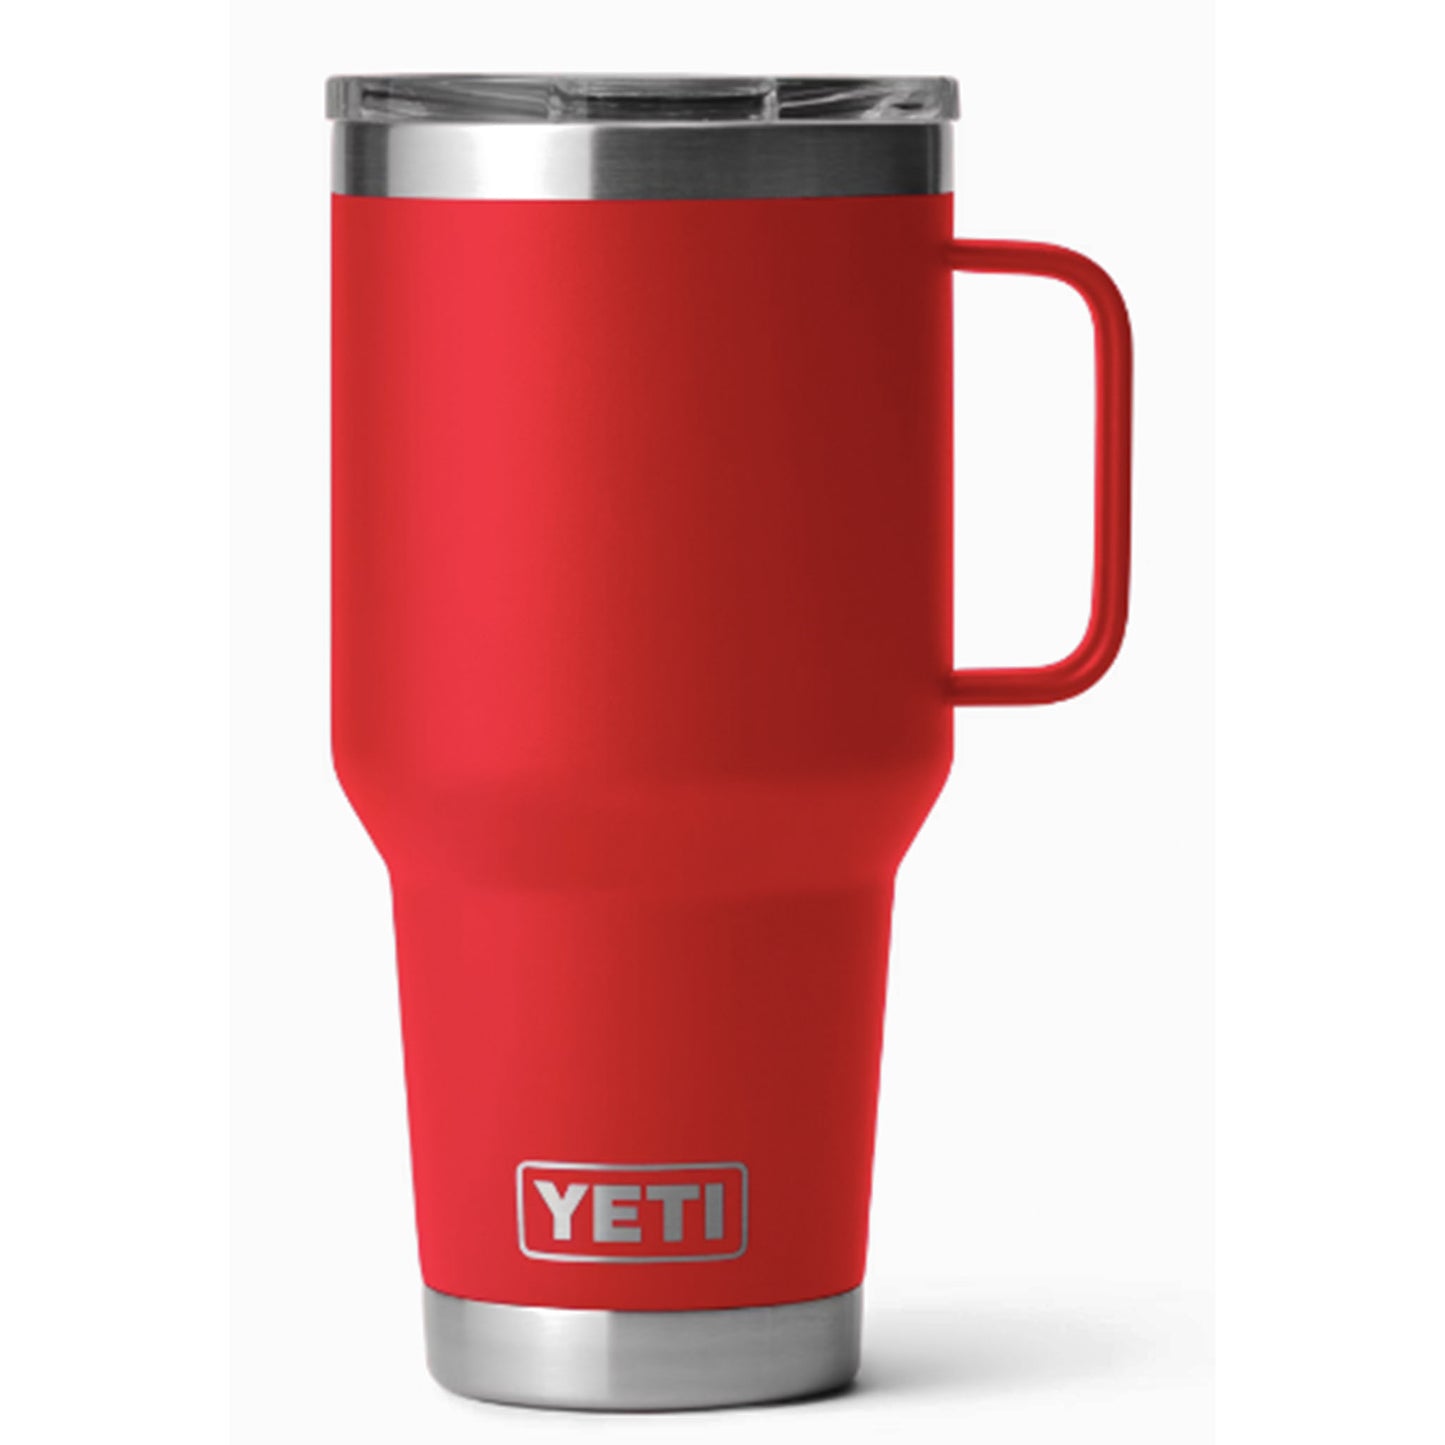 Yeti 30 oz Rescue Red Travel Mug